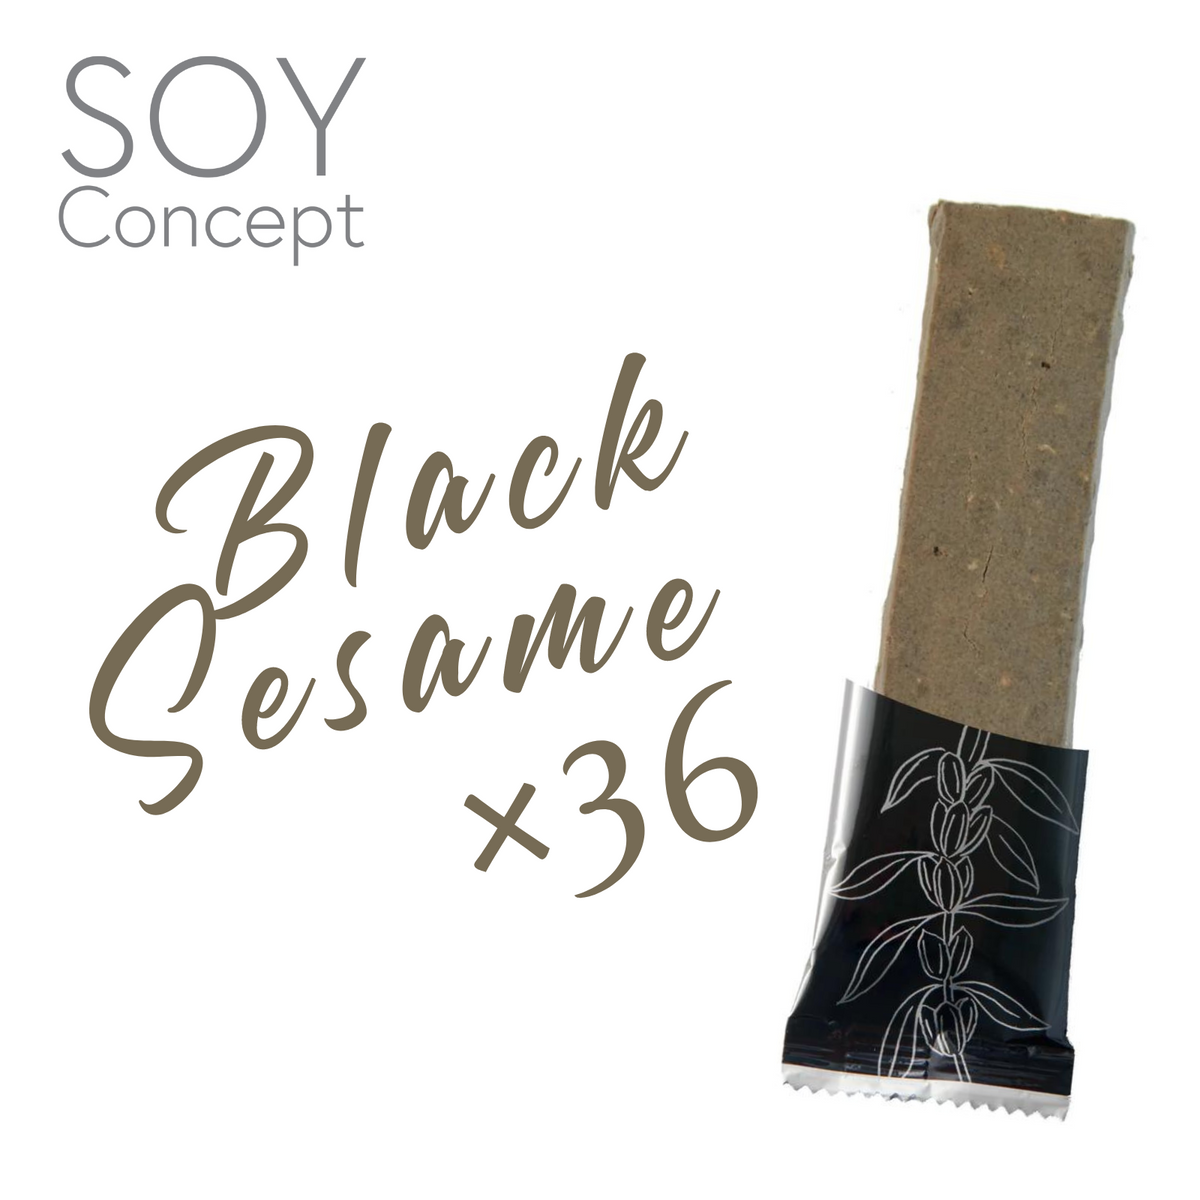 SOY Concept Black Sesame ブラックセサミ お得なセット